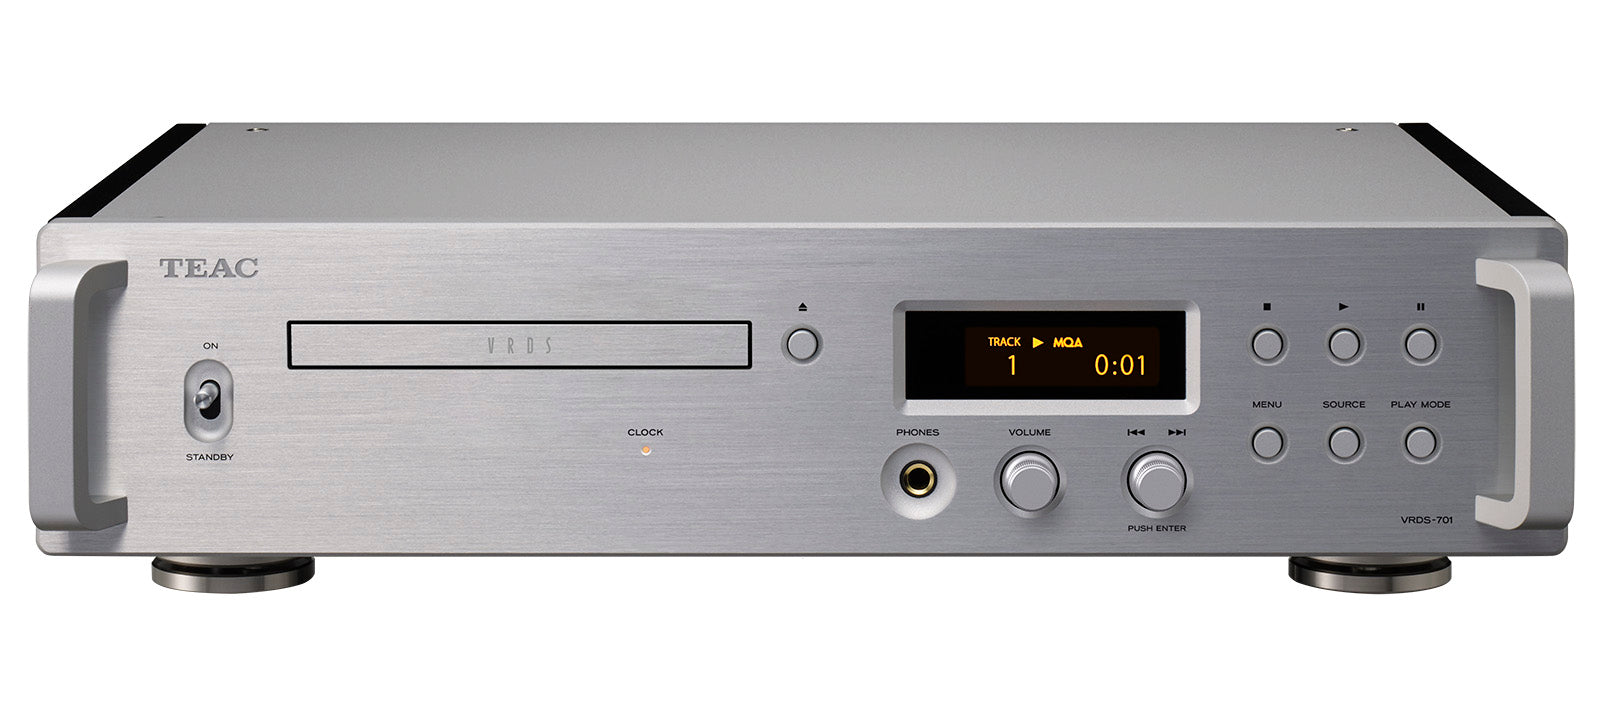 Teac VRDS-701 CD Player